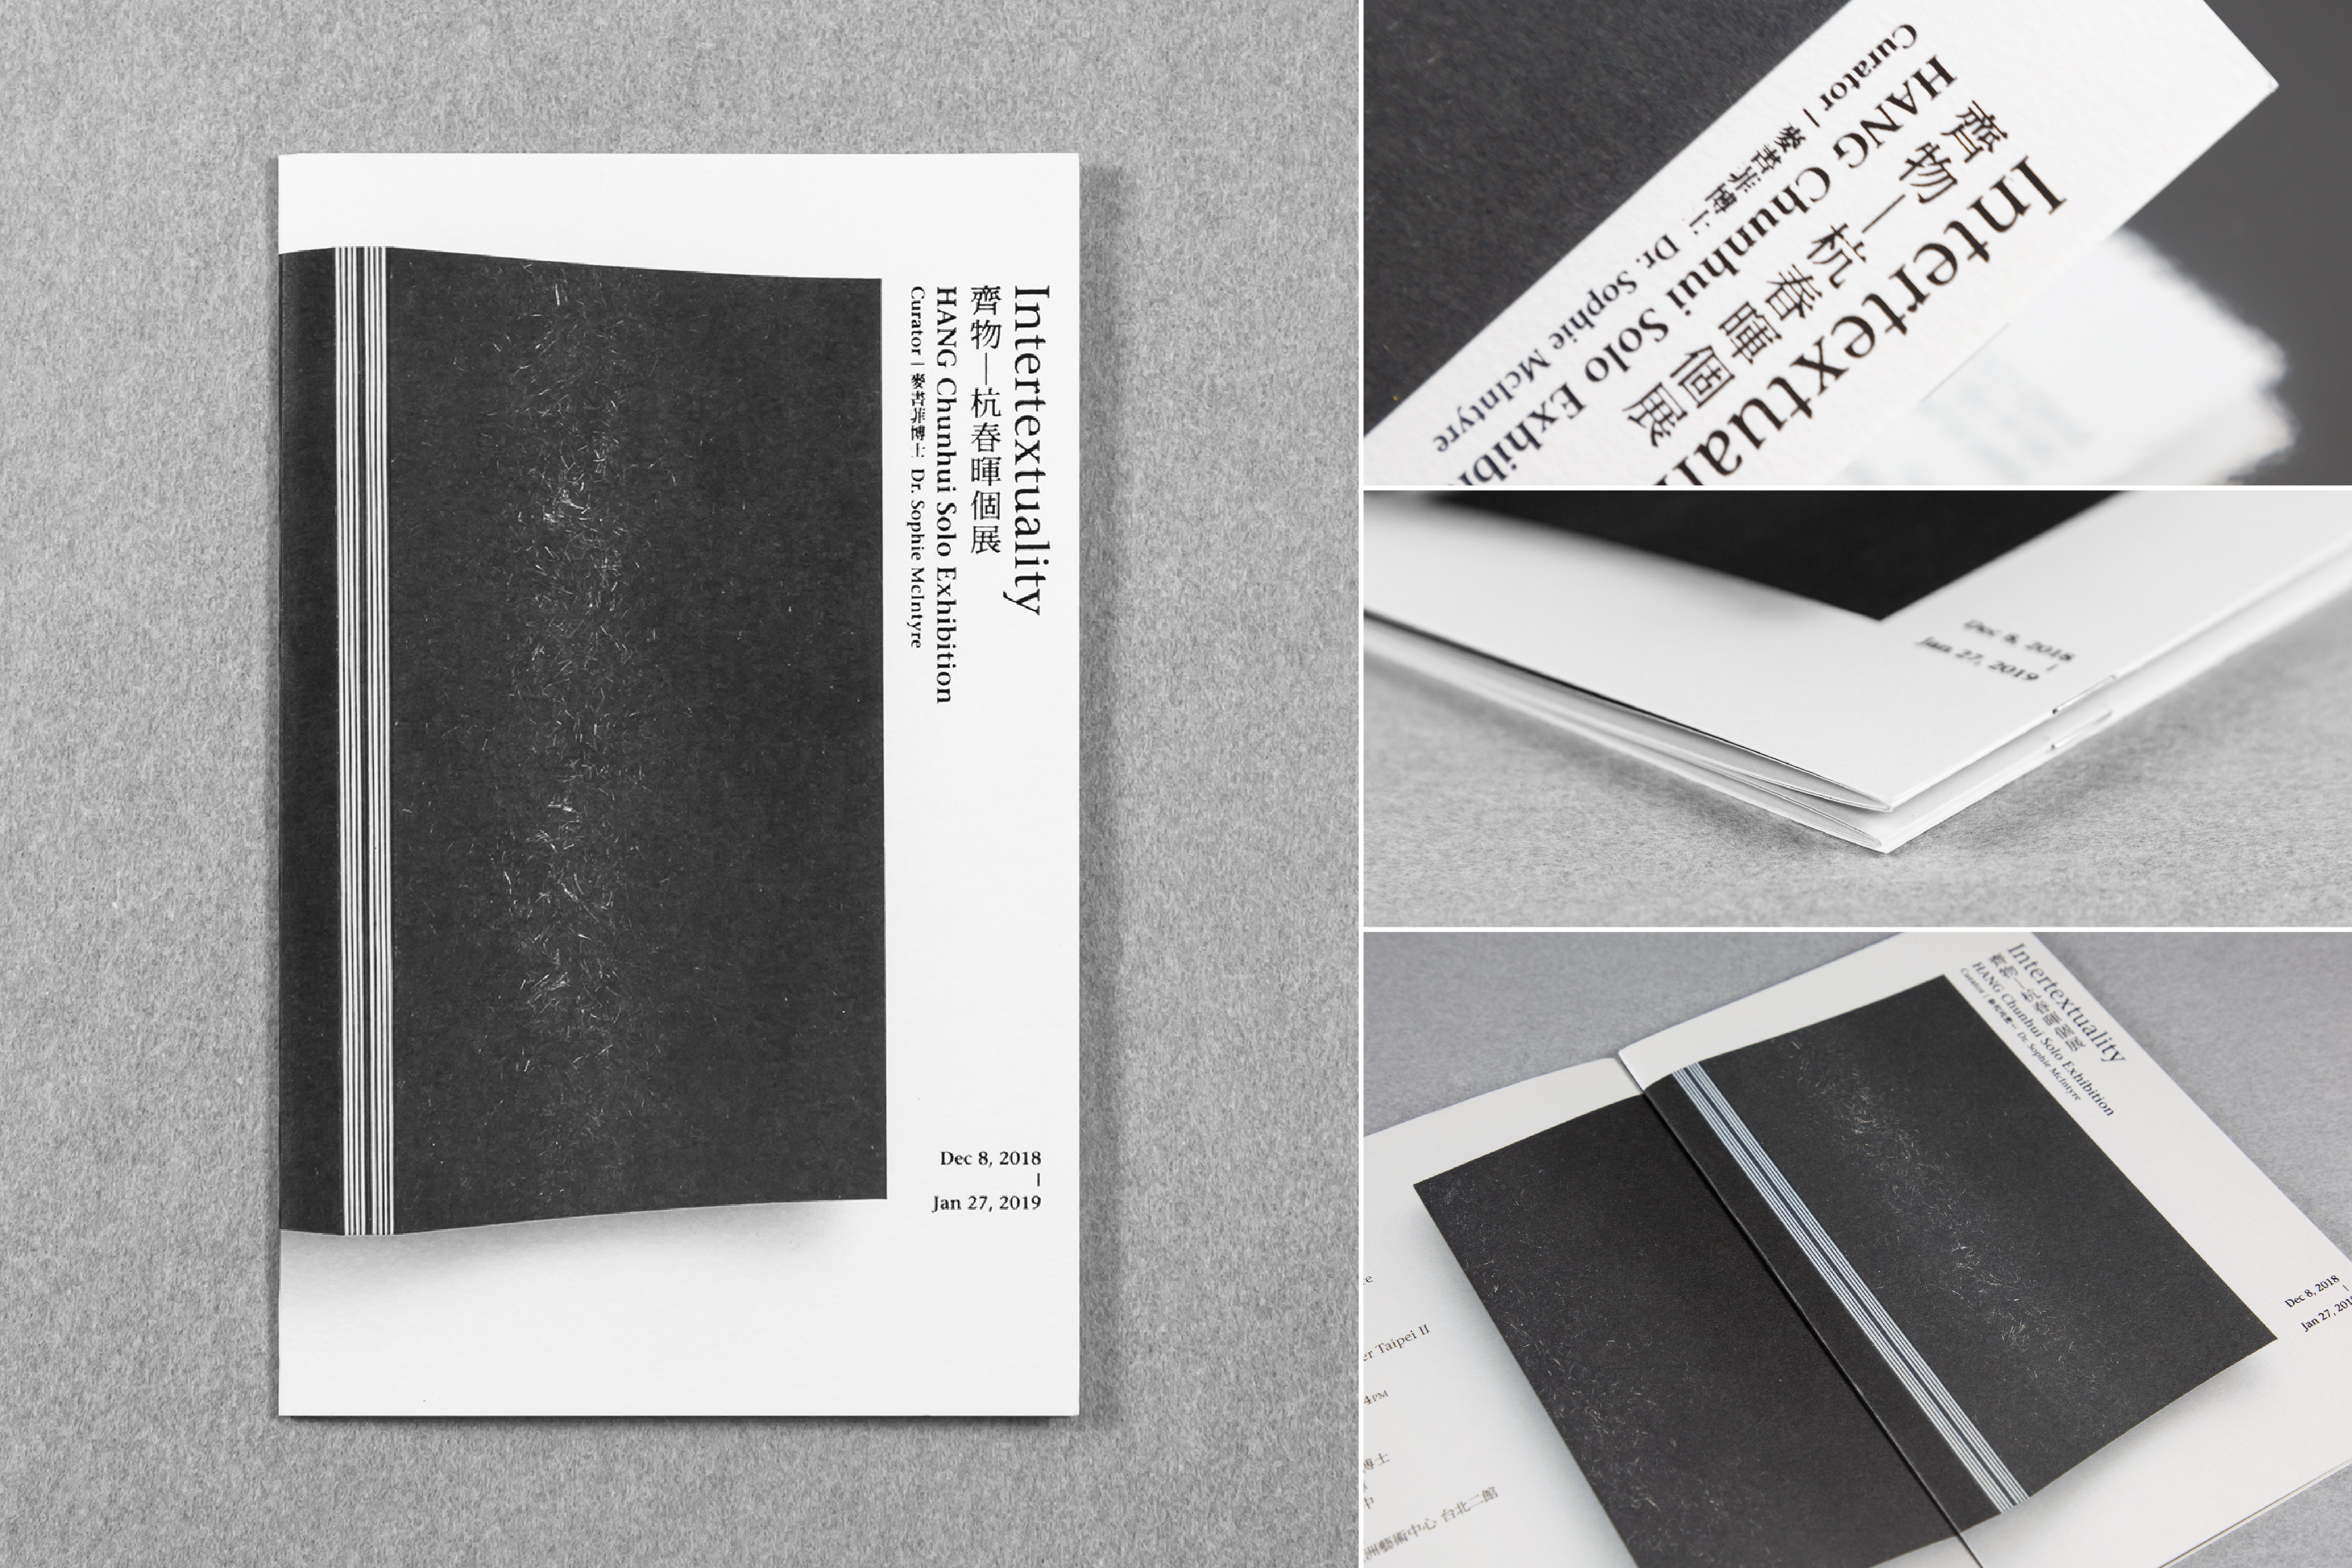 Brochure of ”Intertextuality - HANG Chunhui Solo Exhibition“ by Sung, Di-Yen - Creative Work